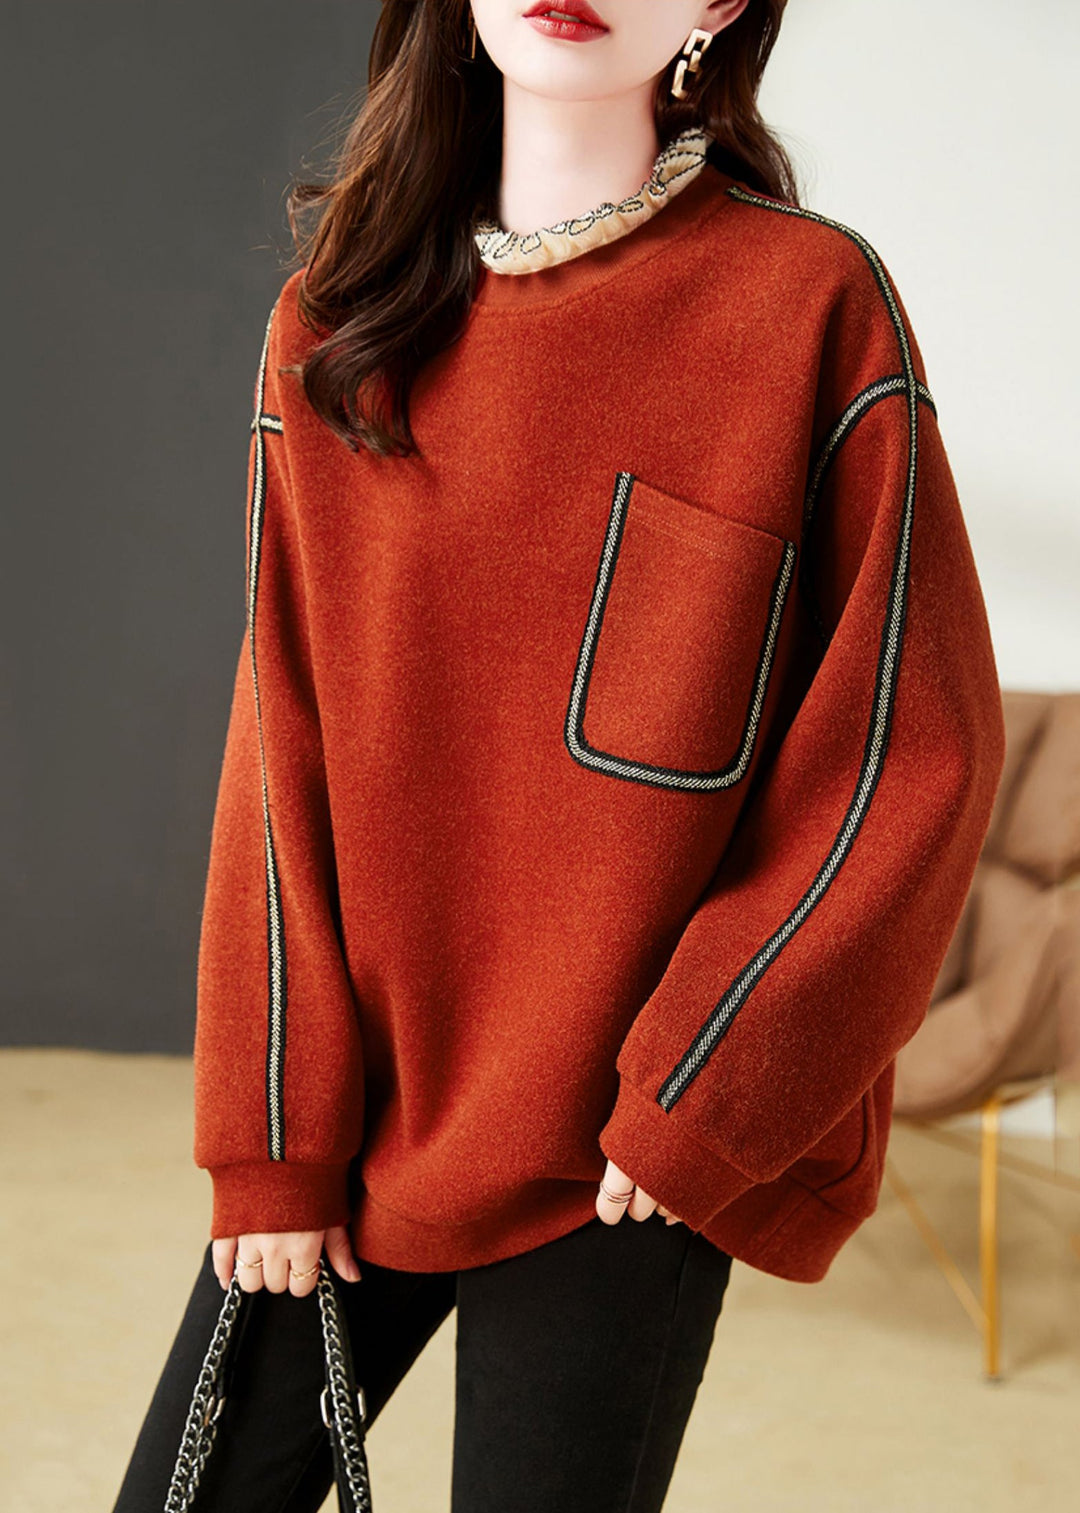 Chic Red Ruffled Cotton Fake Two Piece Sweatshirts Tops Winter